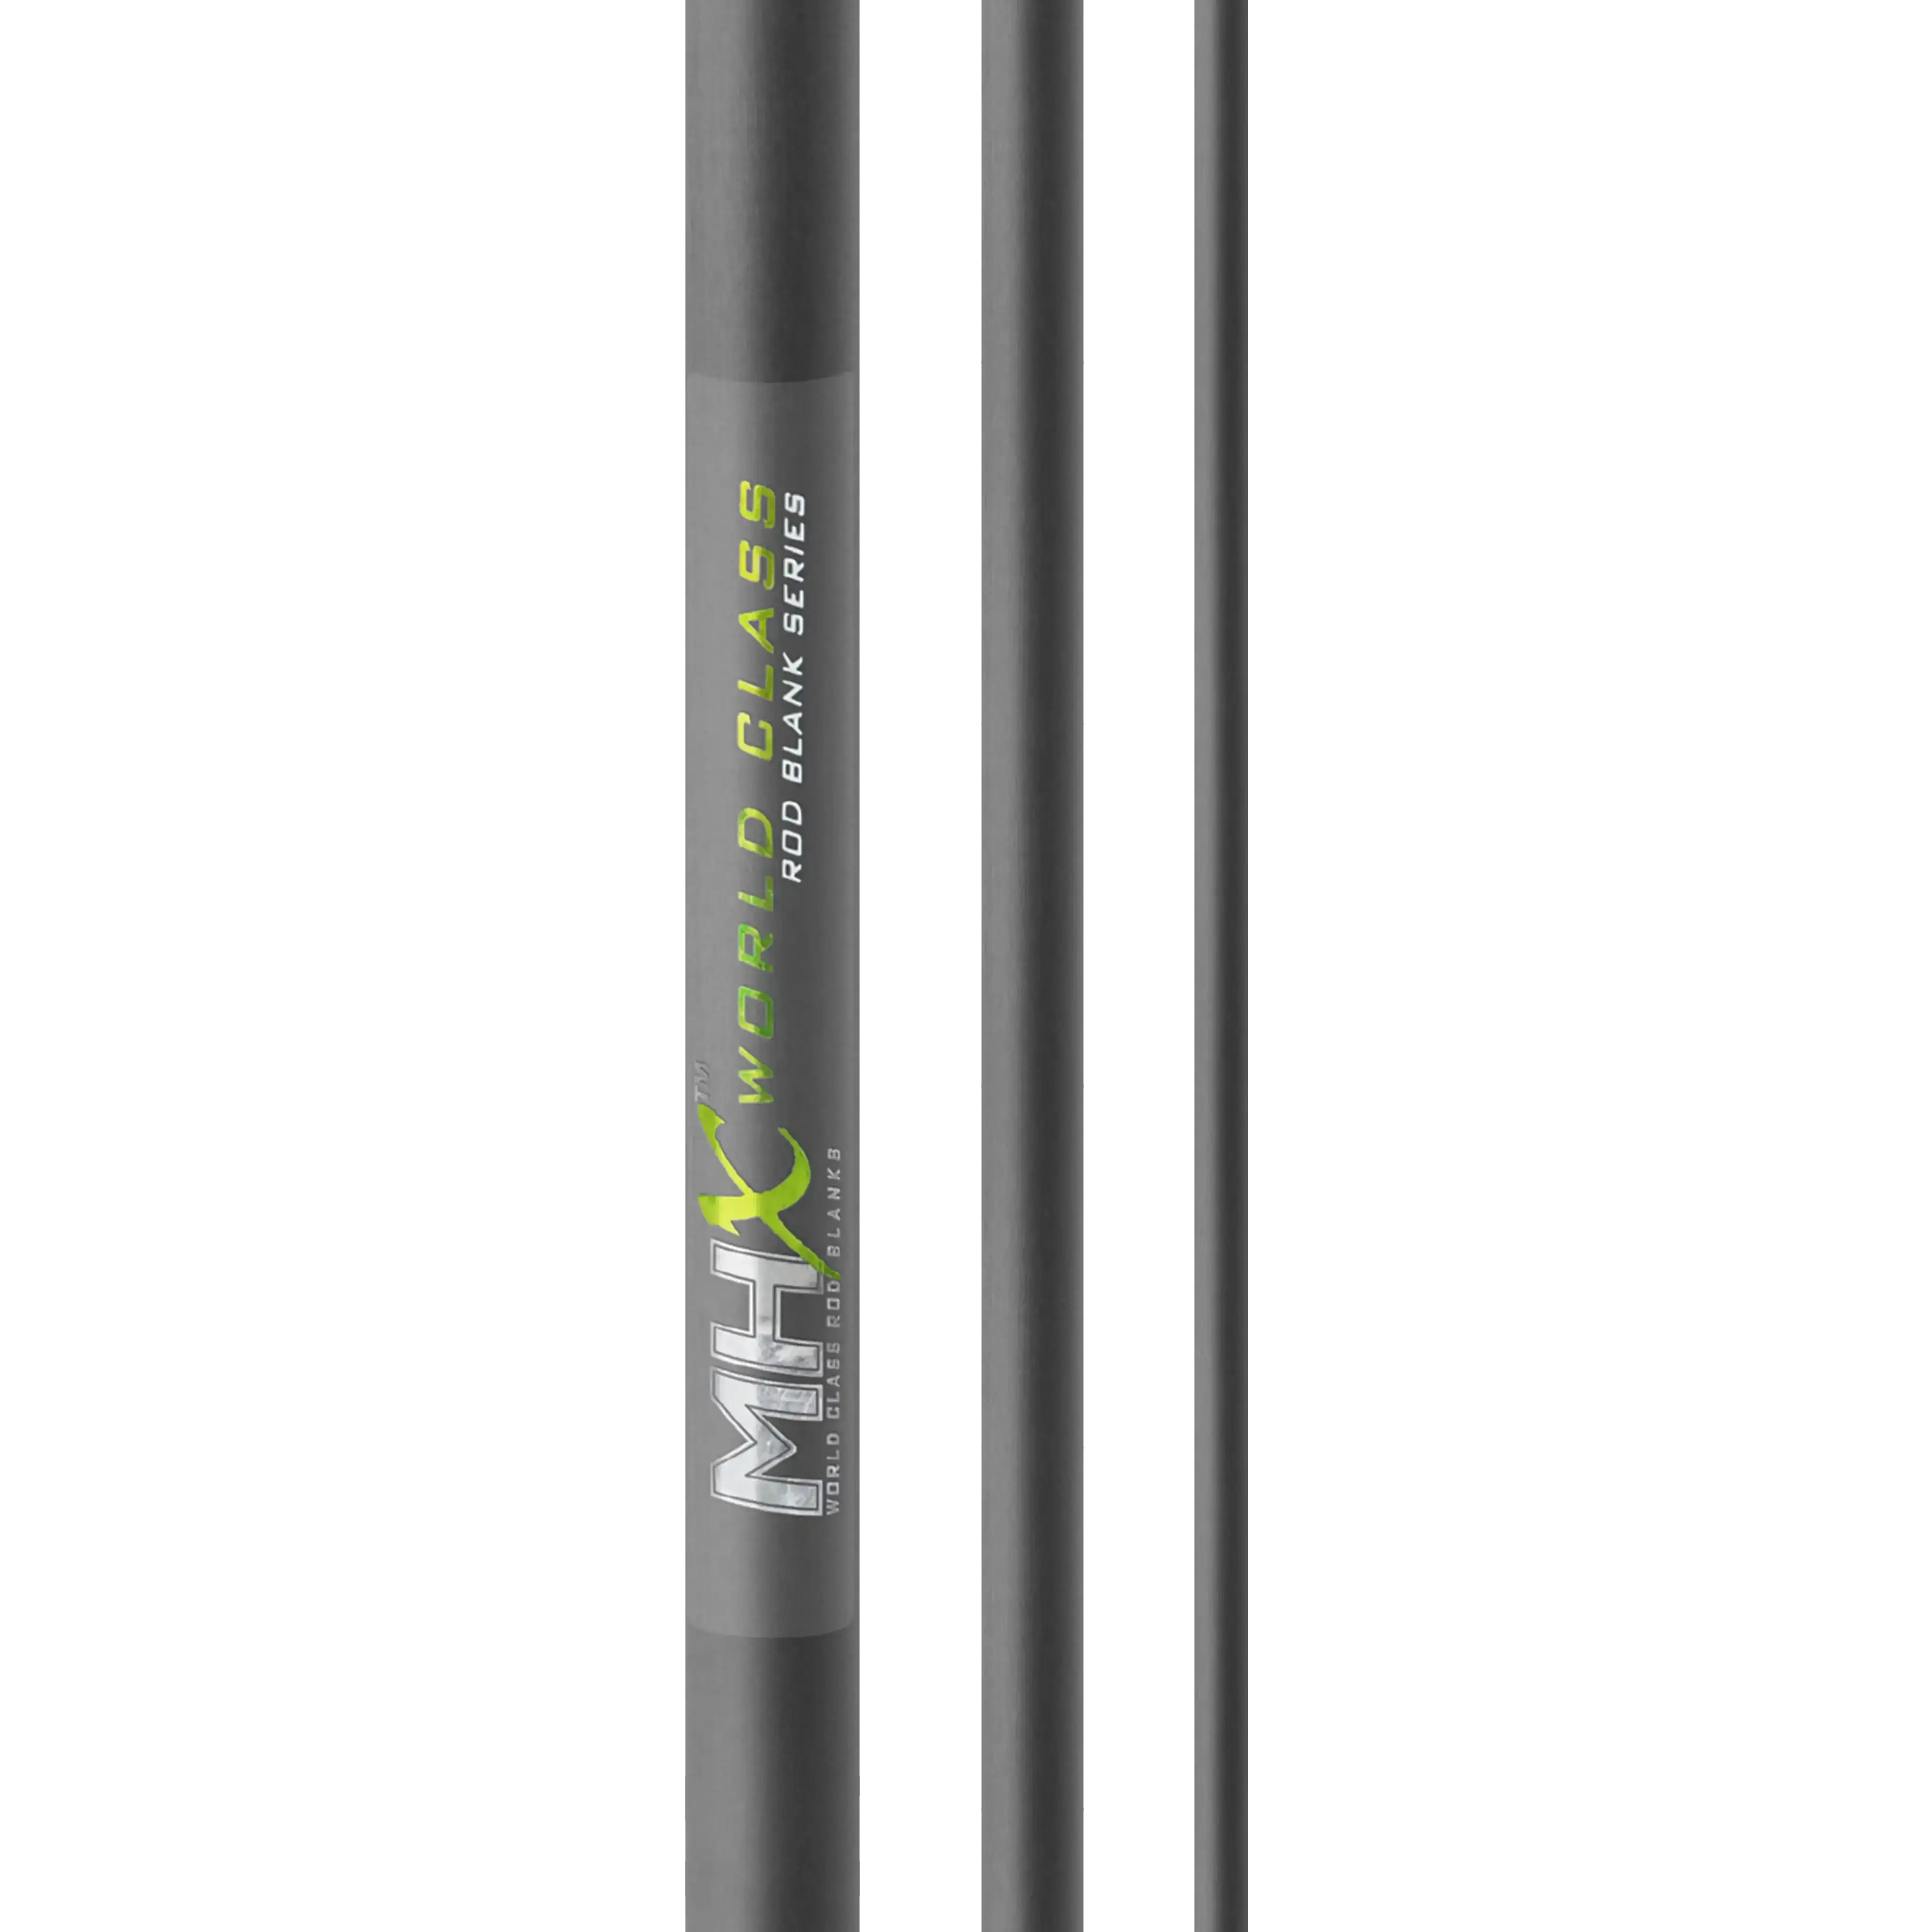 MHX 3-Piece Travel Rod Blanks